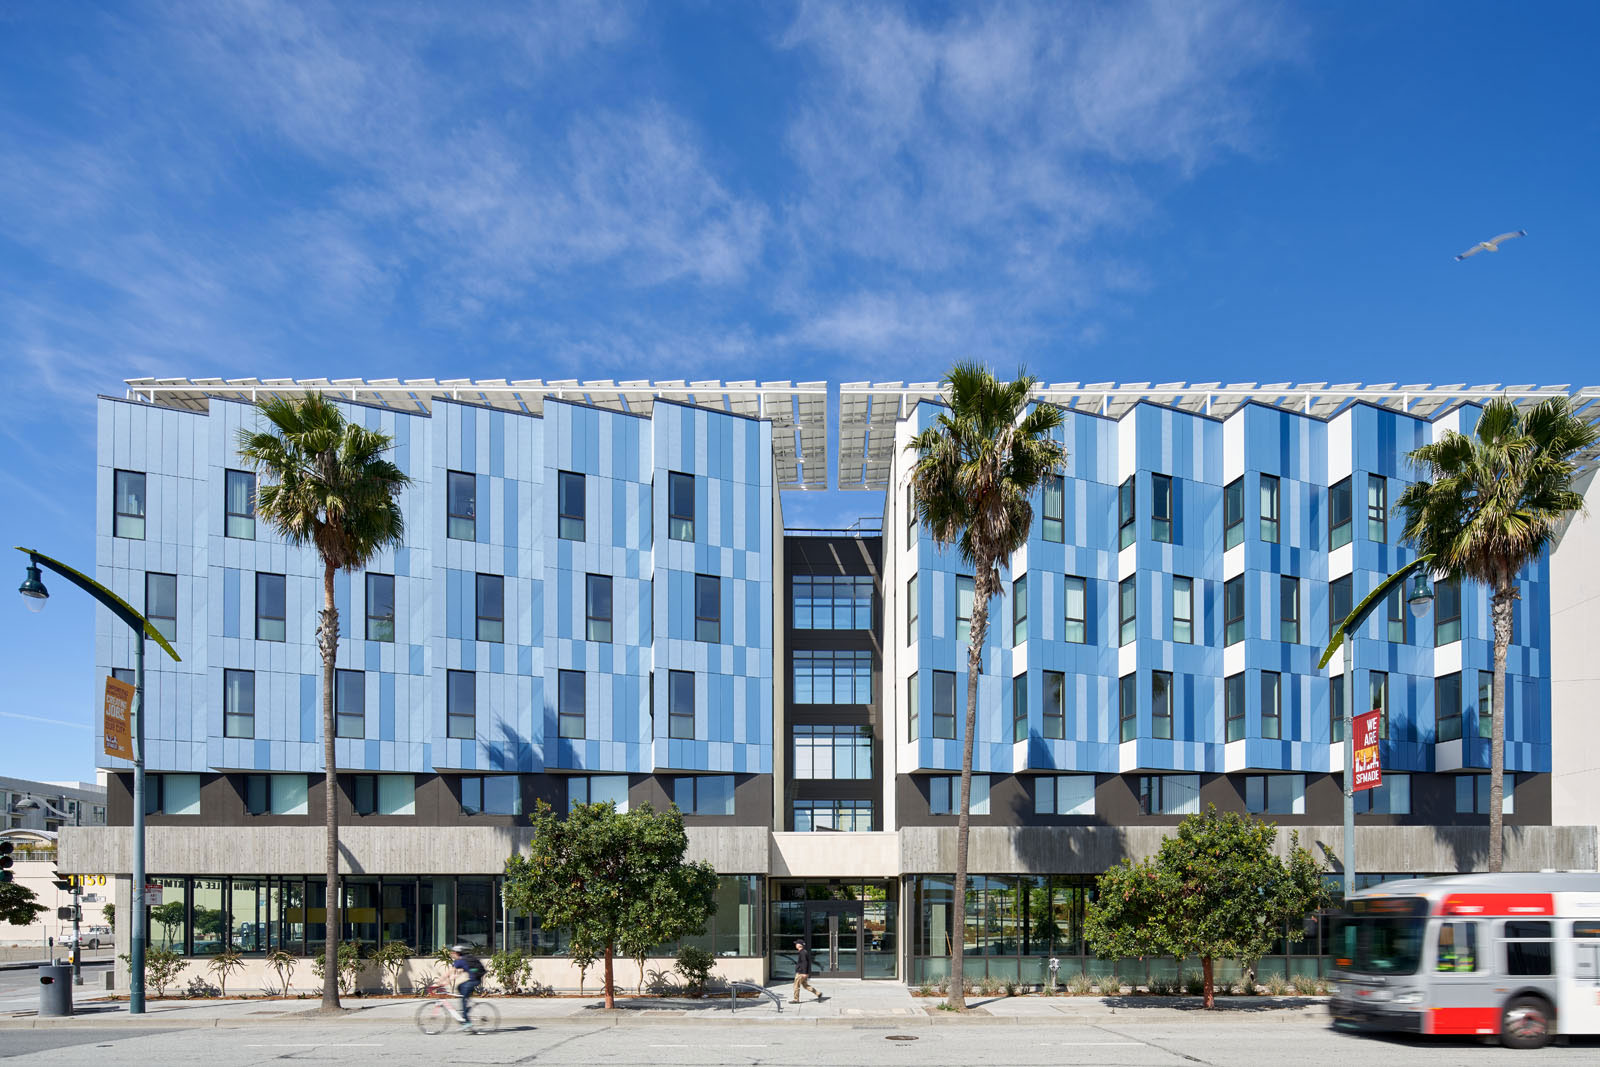 Leddy Maytum Stacy Architects on Designing Sustainable, Equitable, Low-Carbon Housing